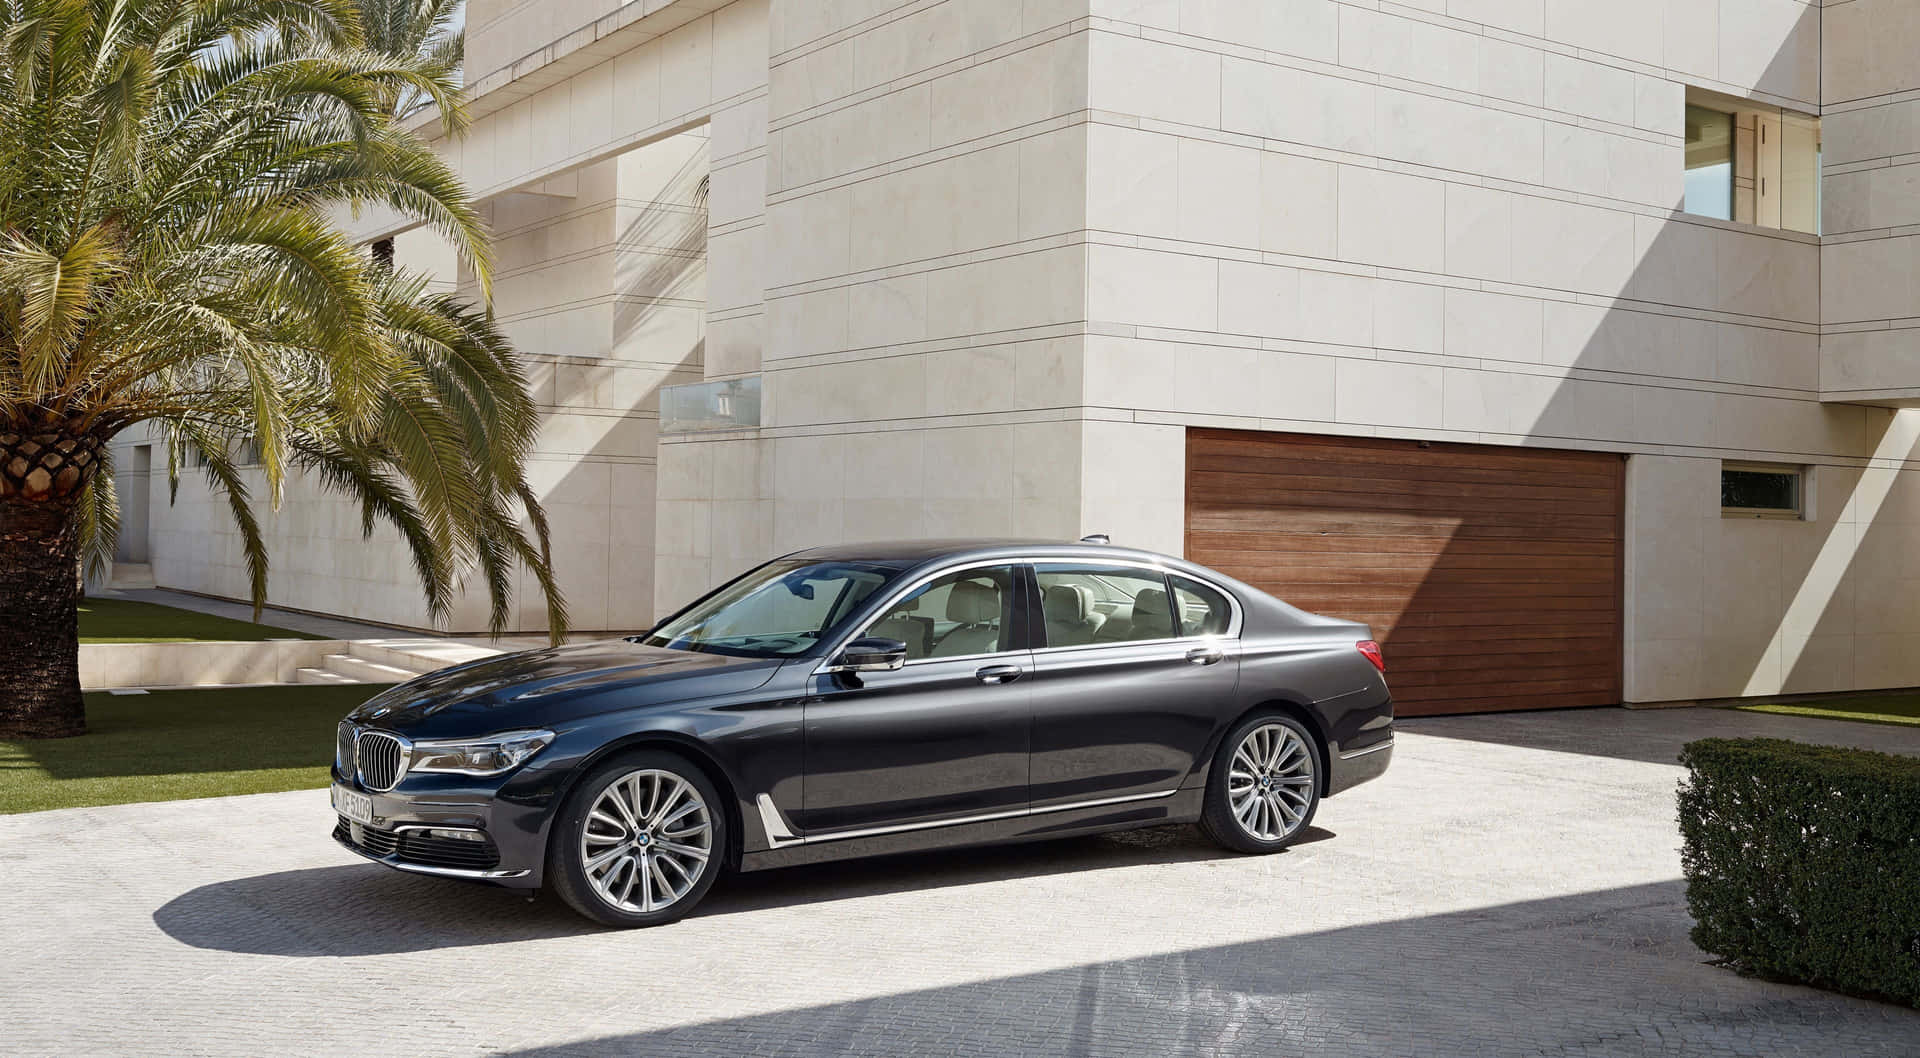 Sleek and Luxurious BMW 7 Series Sedan in Action Wallpaper